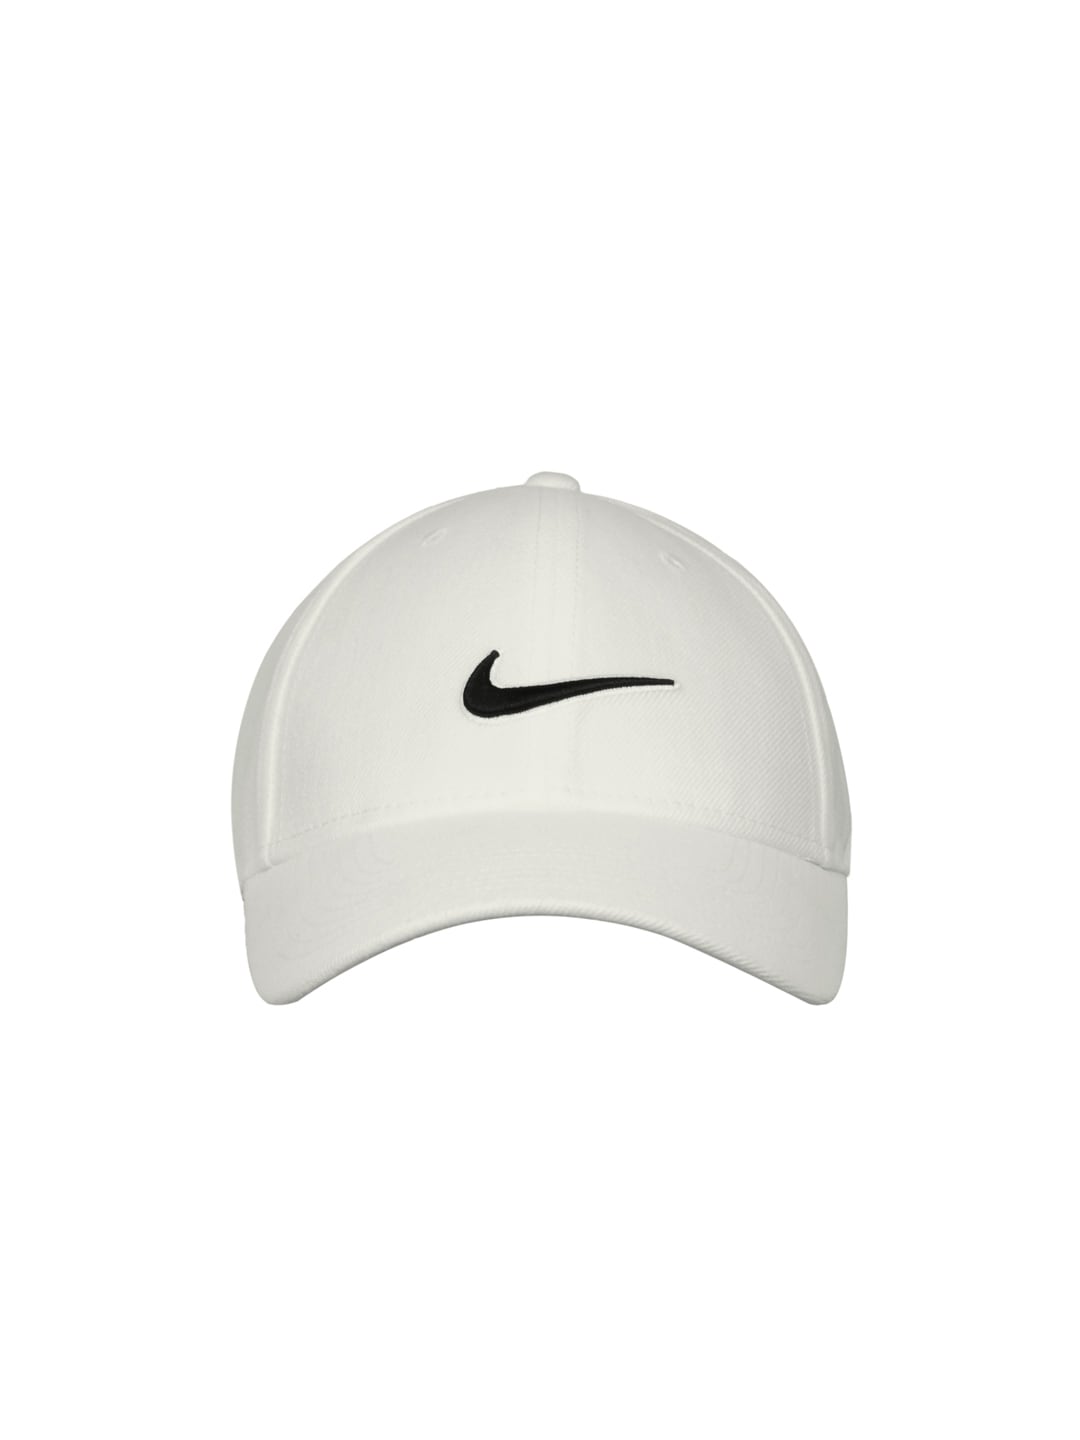 Nike Men White Cap